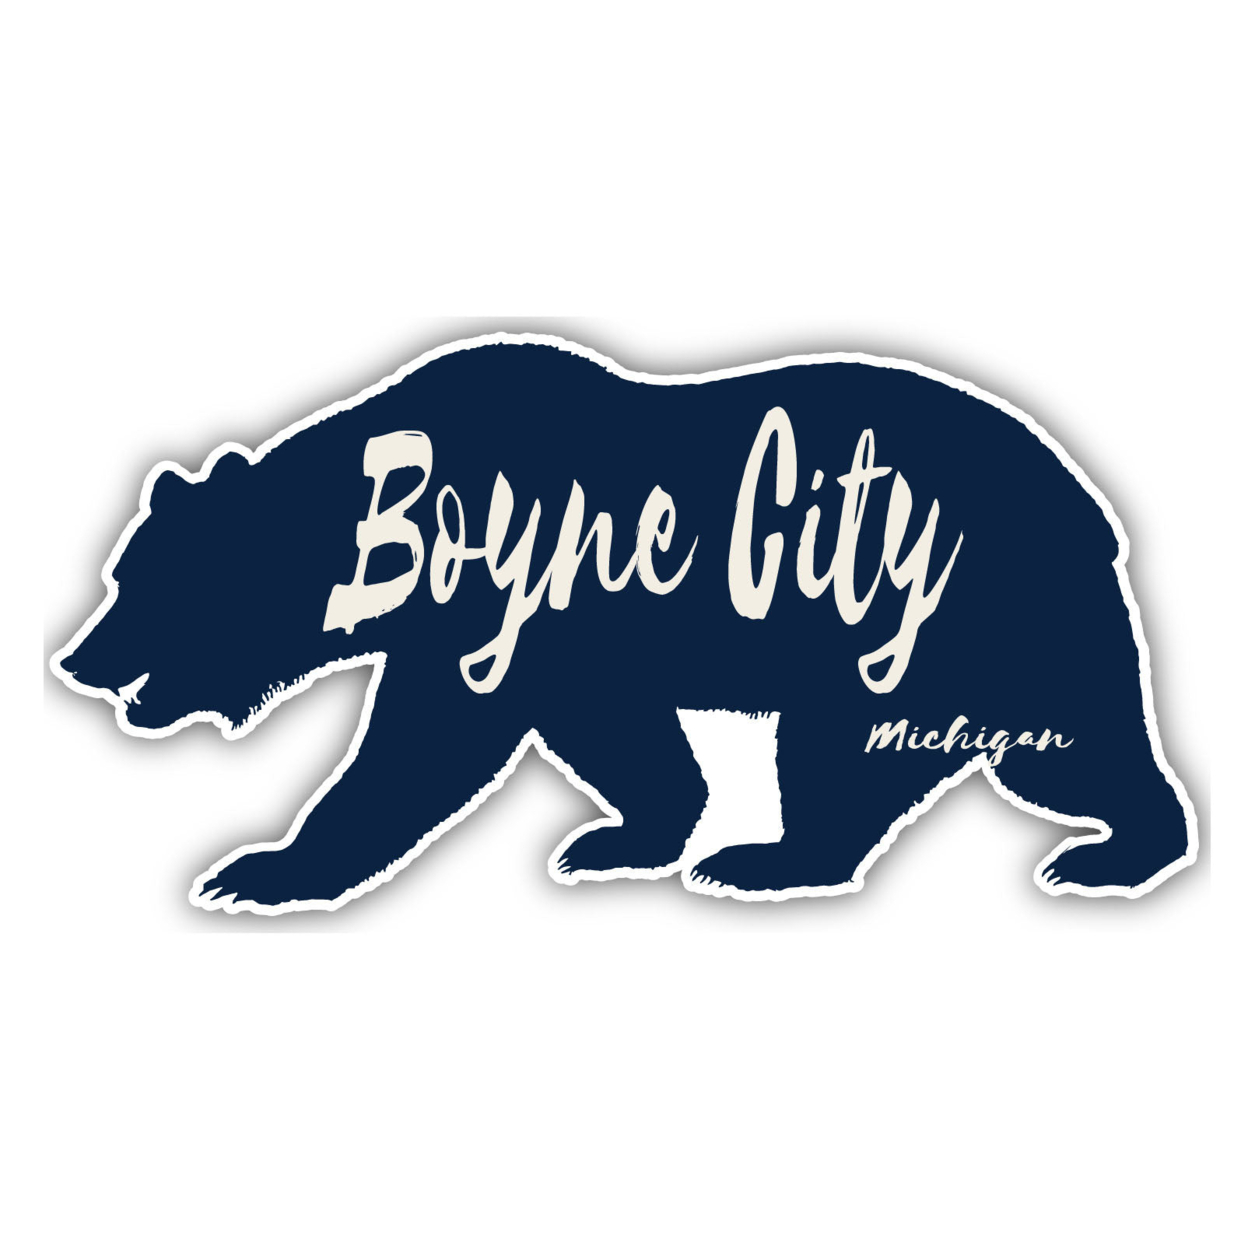 Boyne City Michigan Souvenir Decorative Stickers (Choose Theme And Size) - 4-Pack, 6-Inch, Tent